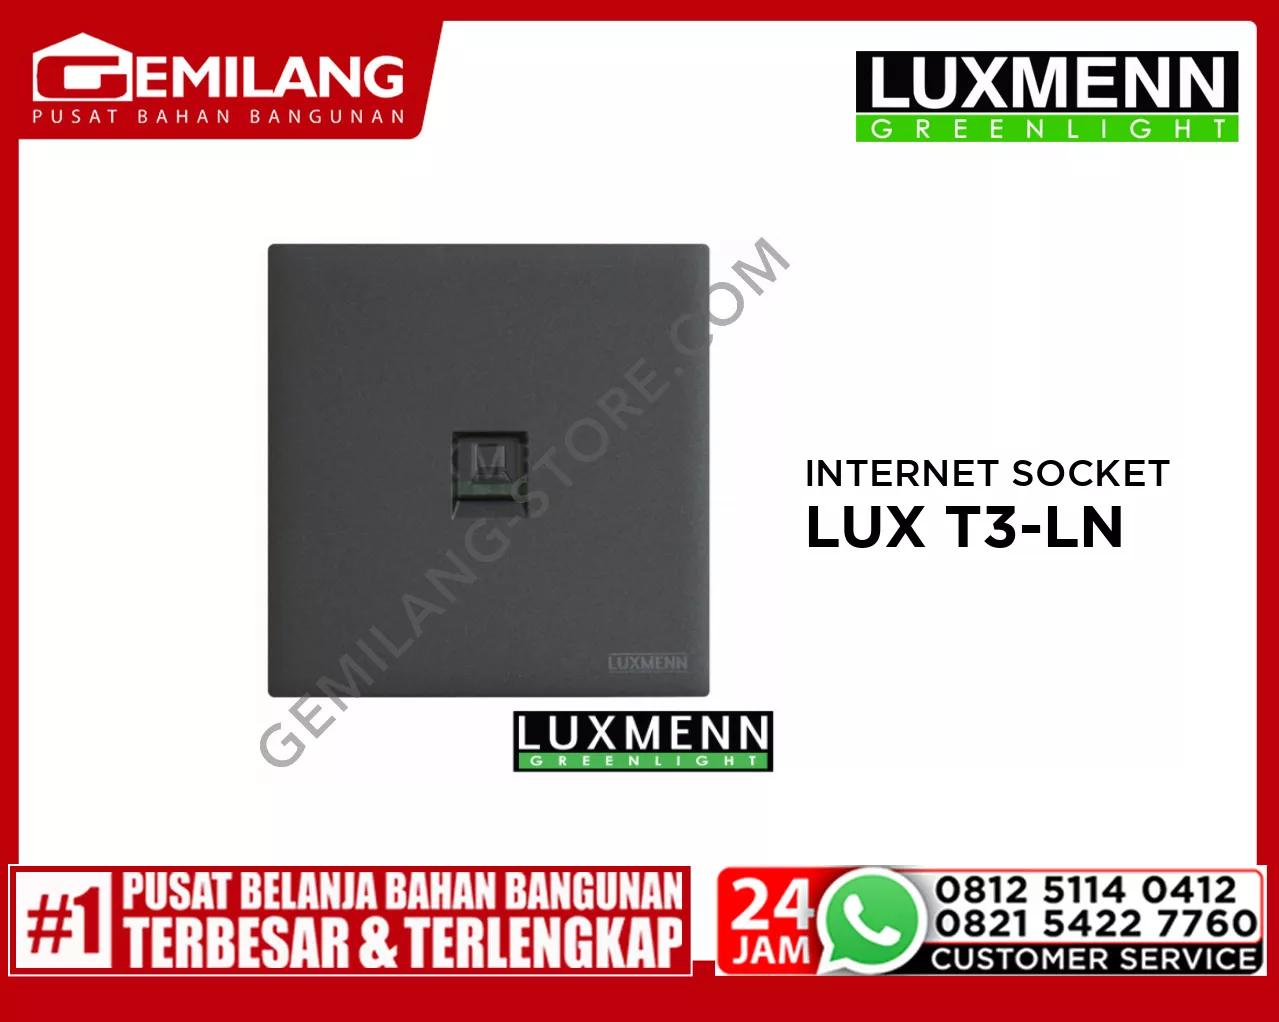 LUXMENN INTERNET SOCKET LUX T3-LN GREY